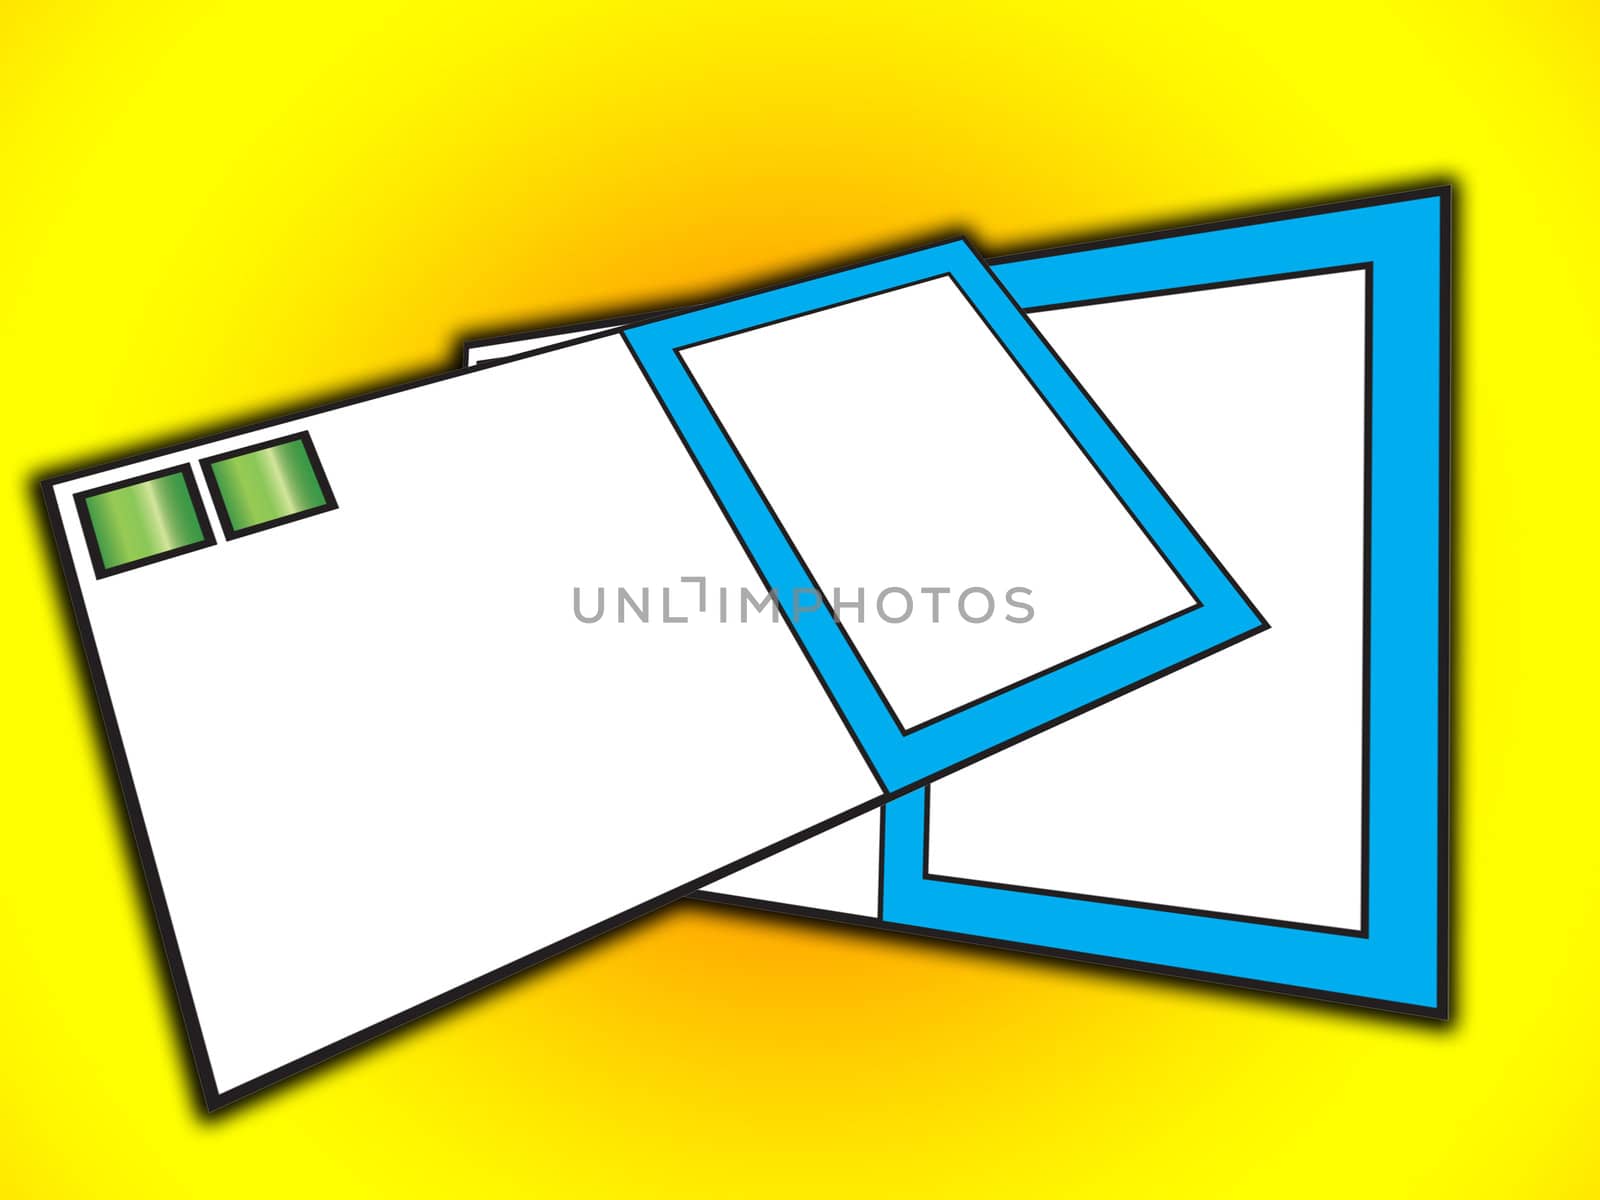 Blank customisable business cards.